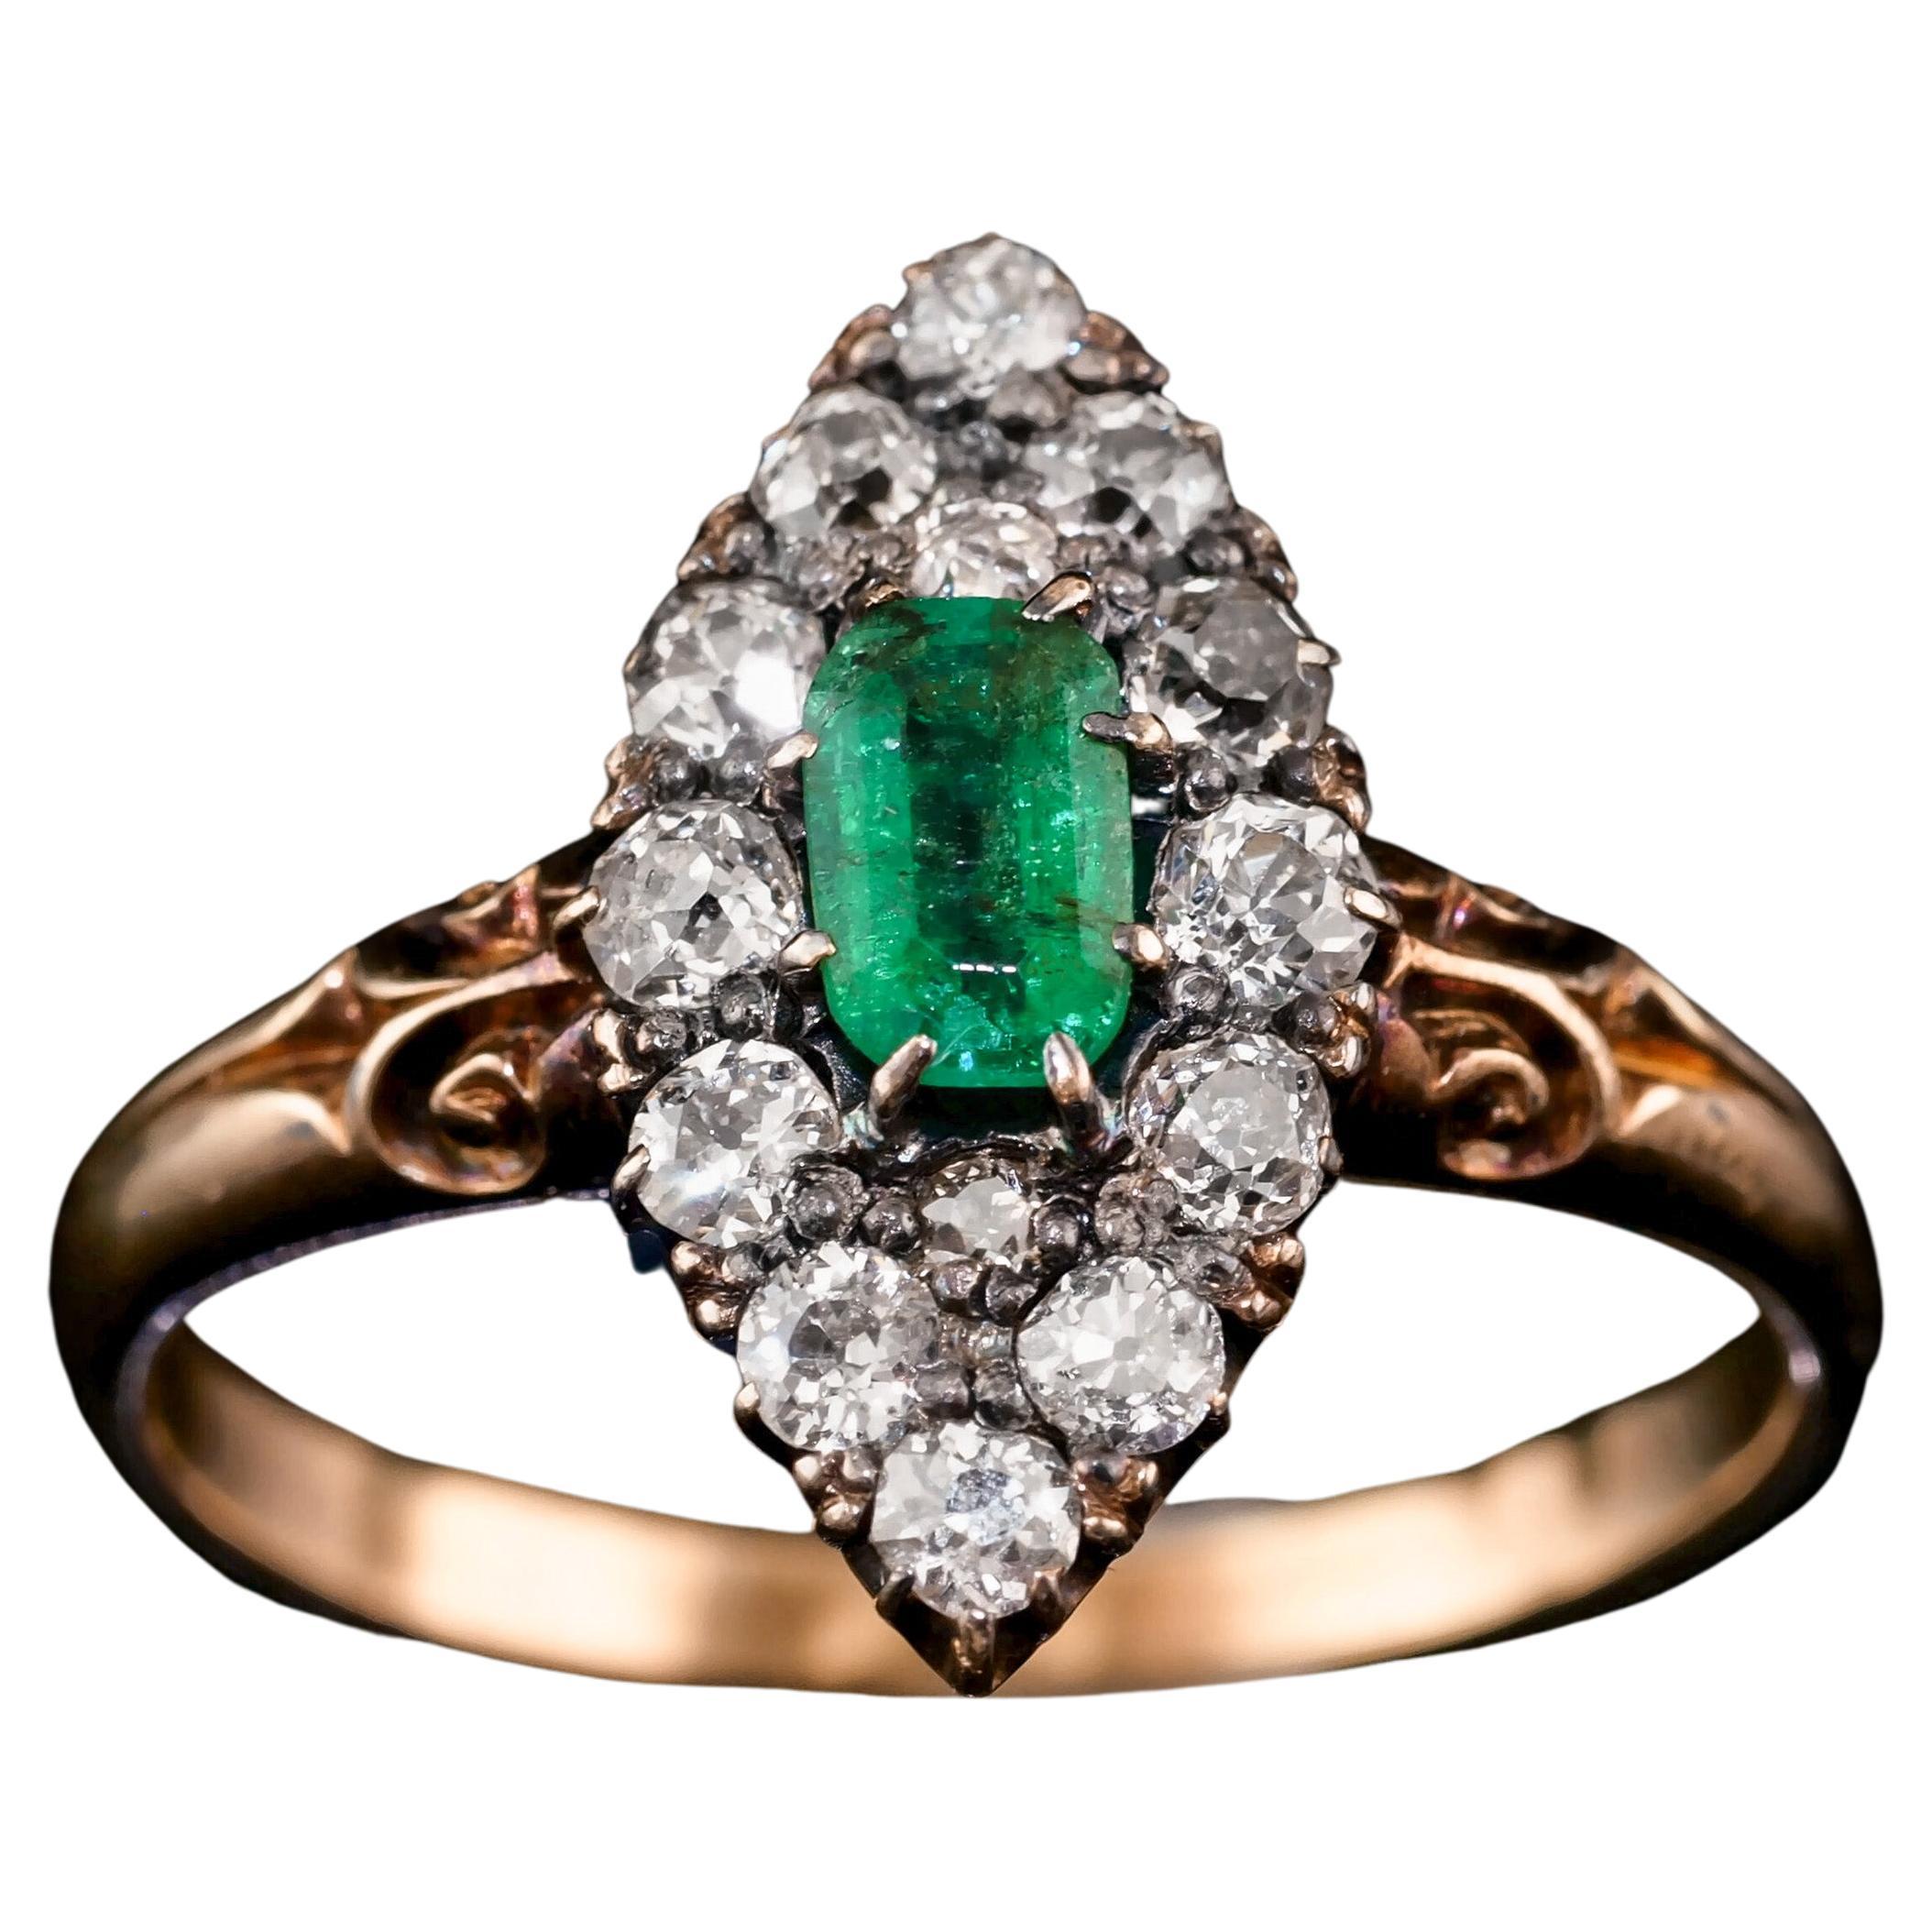 Antique Victorian 18K Gold Emerald & Diamond Navette Cluster Ring - c.1880 For Sale